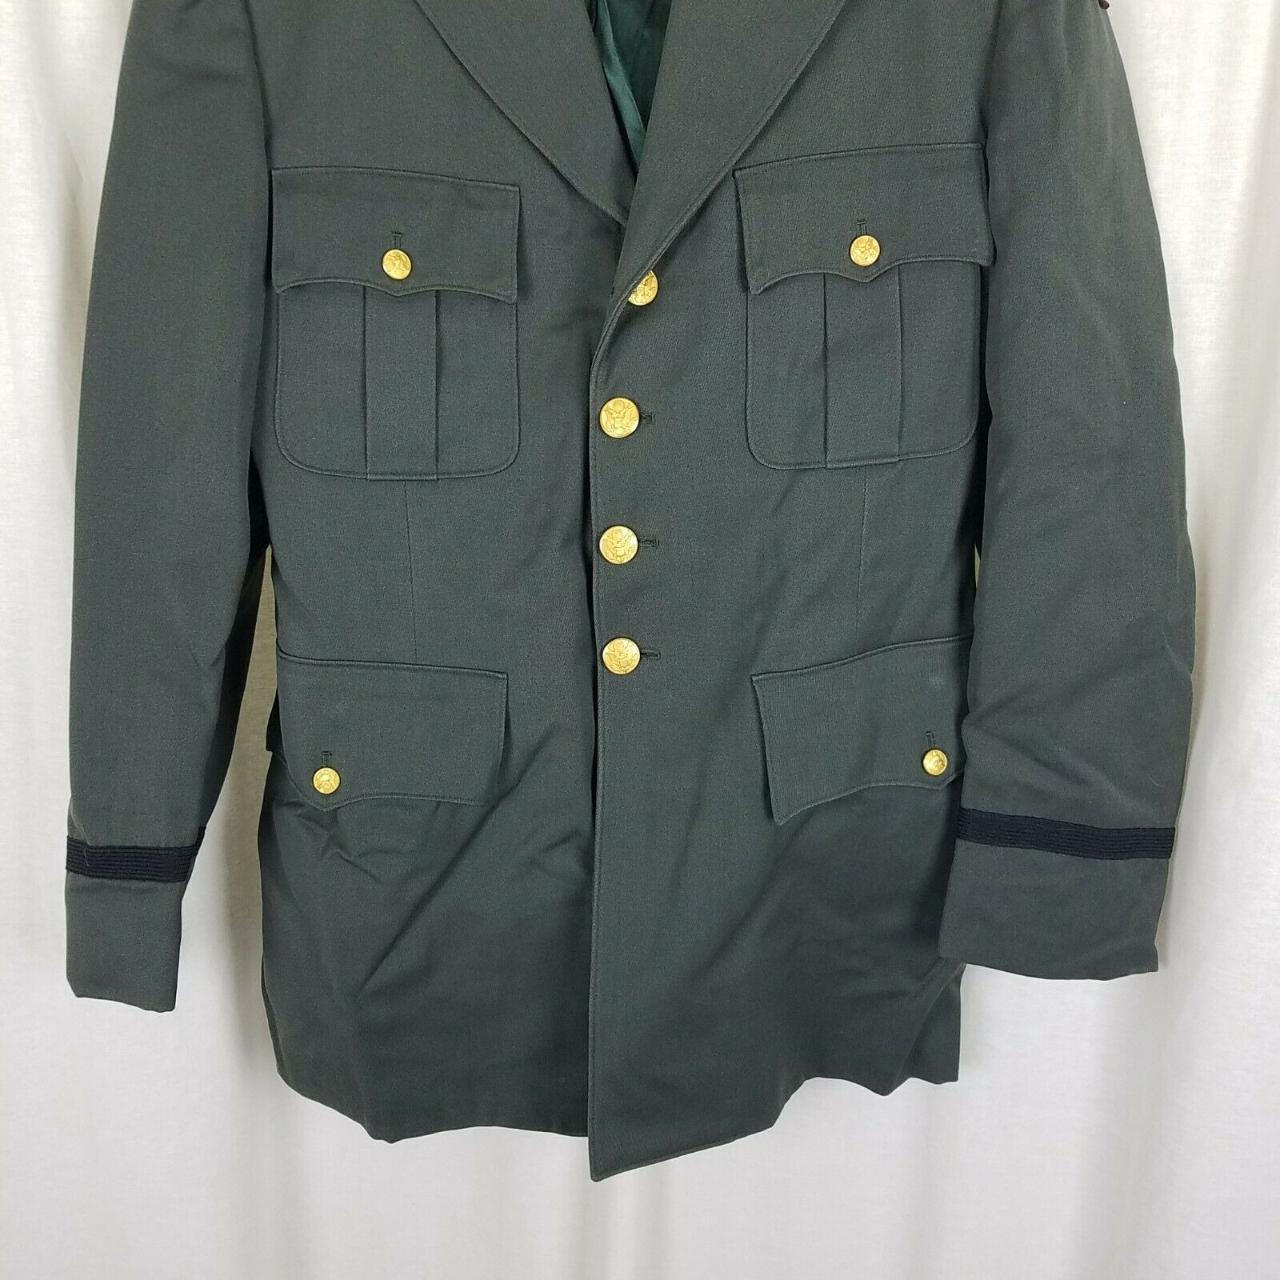 Irving L. Wilson US military uniform jacket with... - Depop